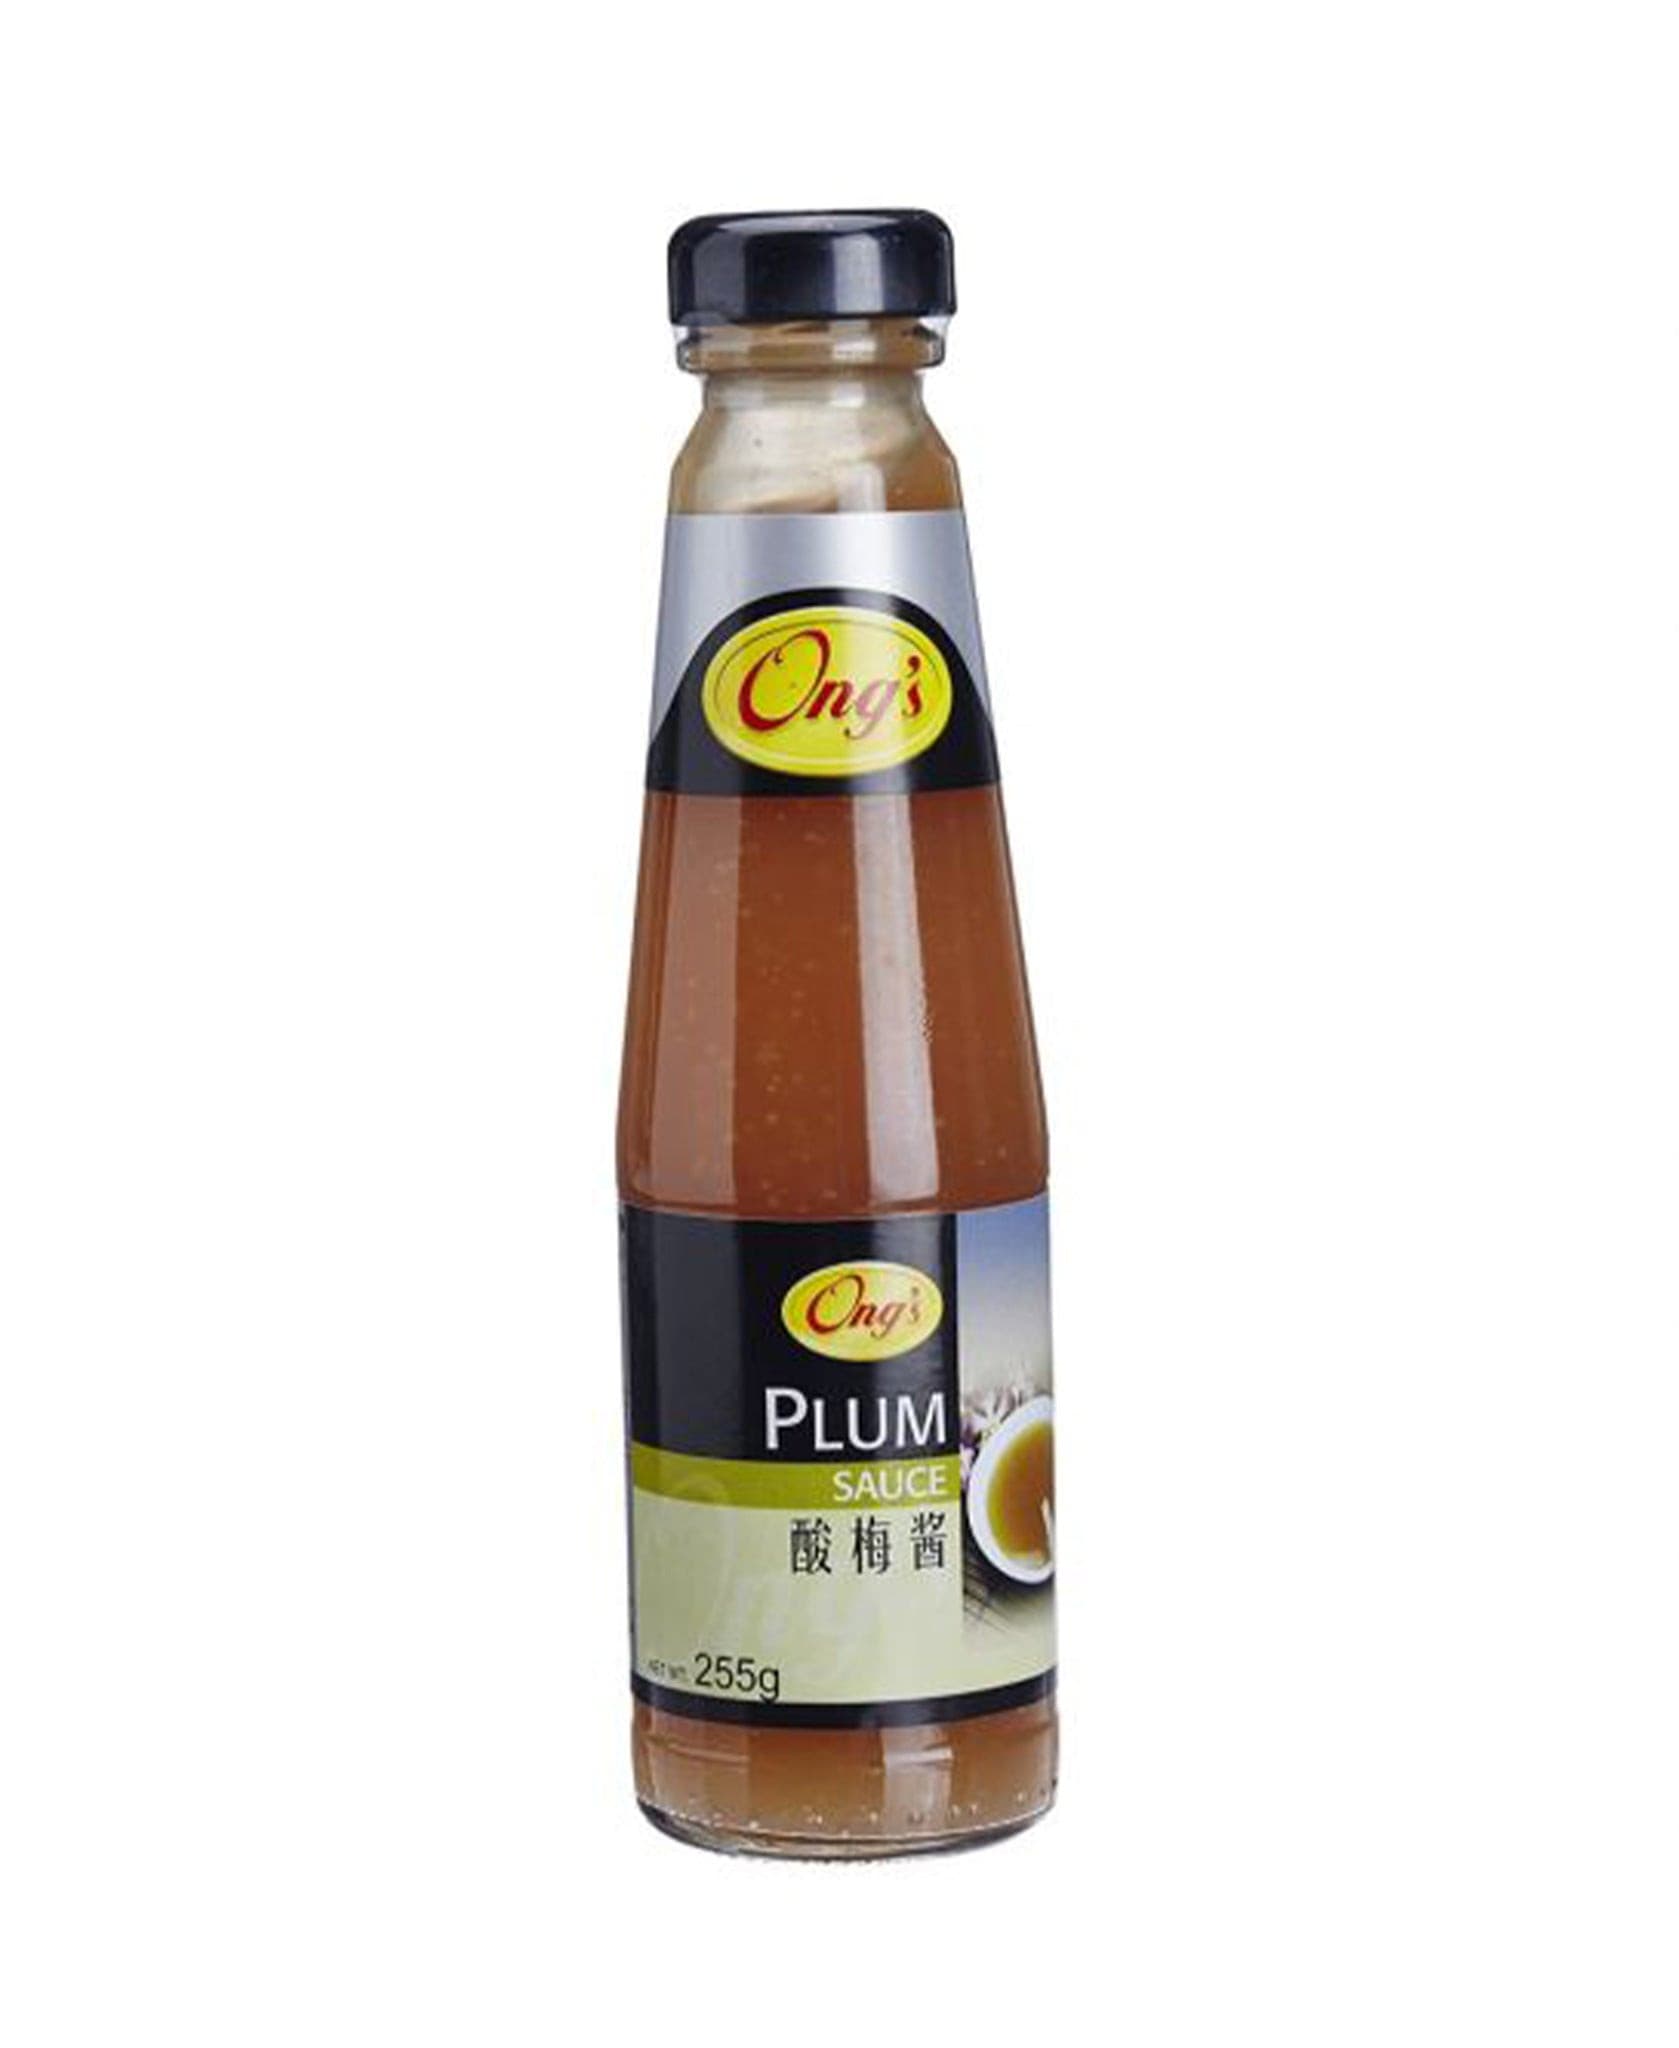 Ongs Plum Sauce (7047389970619)